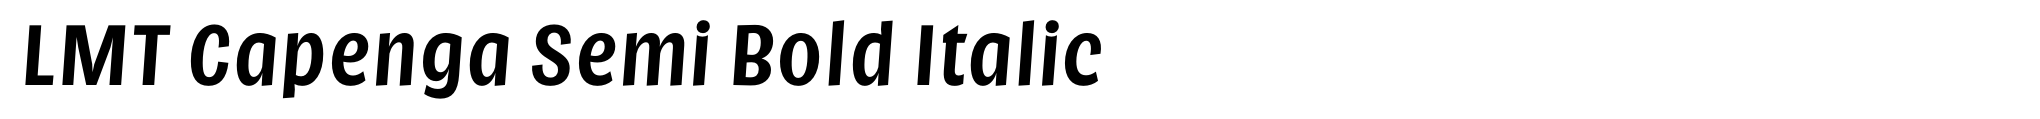 LMT Capenga Semi Bold Italic image